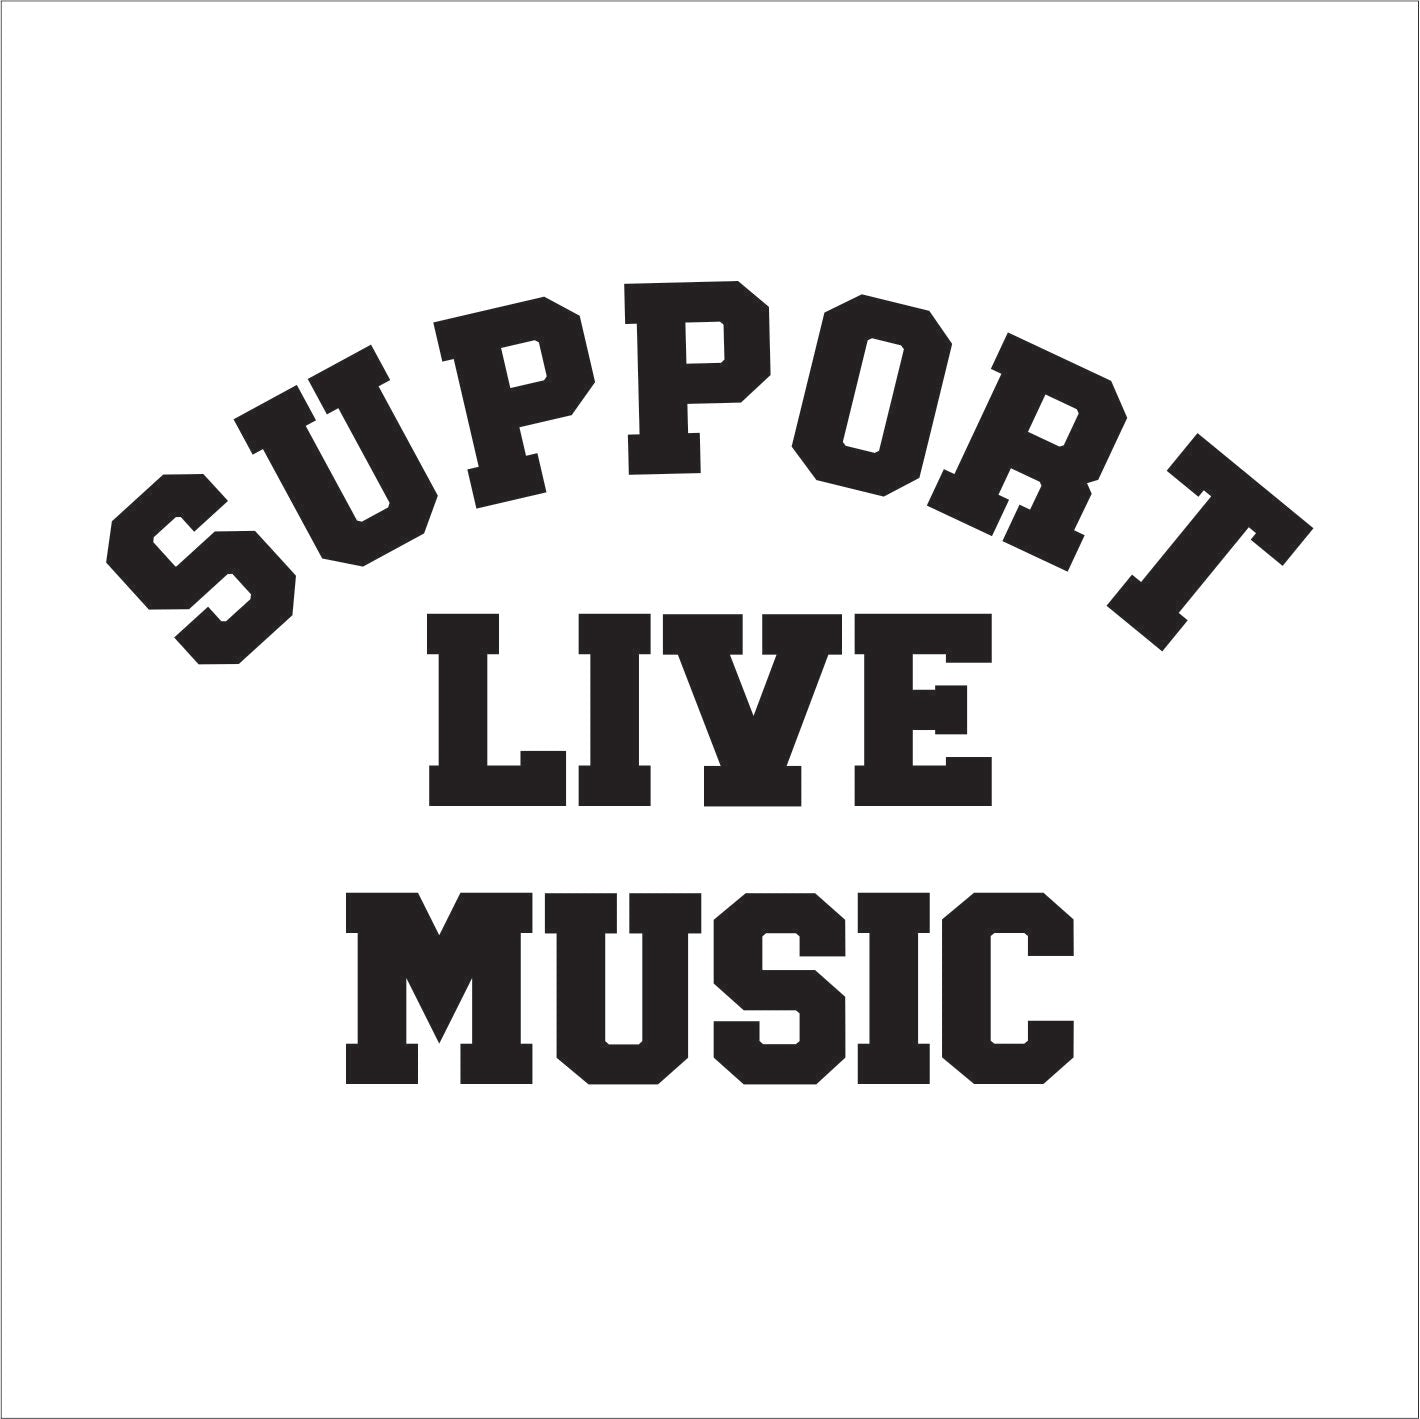 Support Live Music Trucker Hat